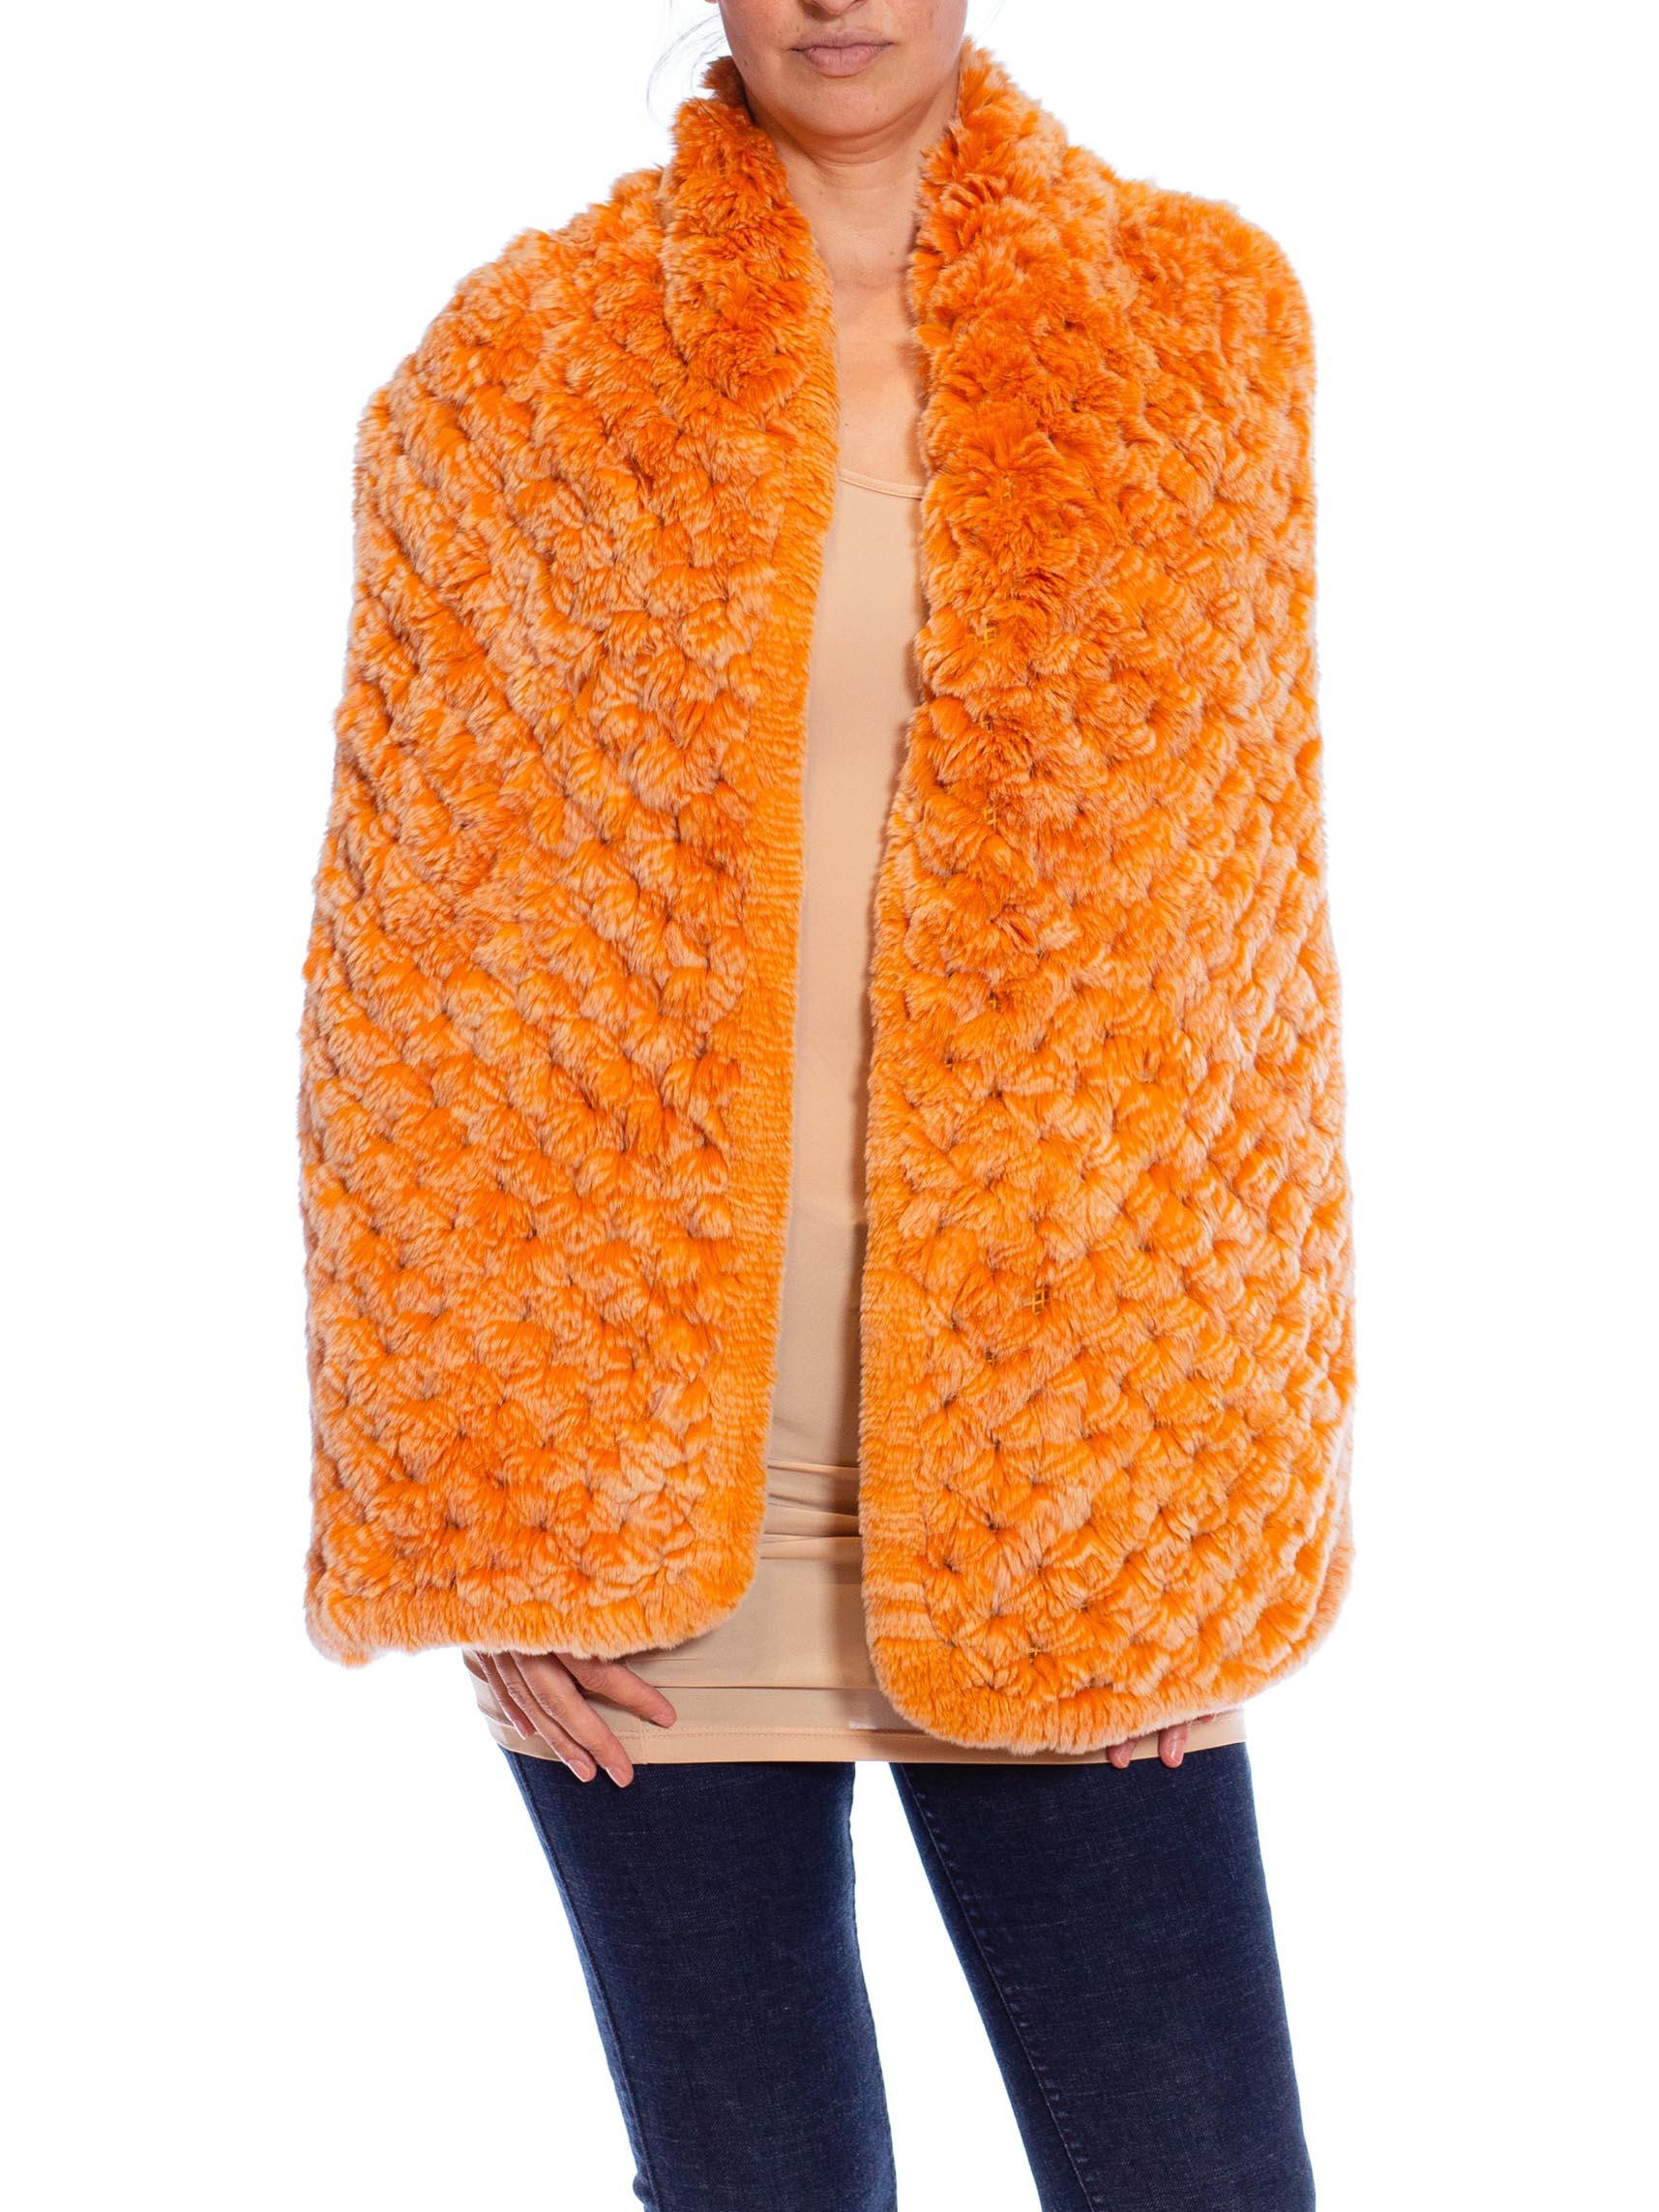 orange fur scarf